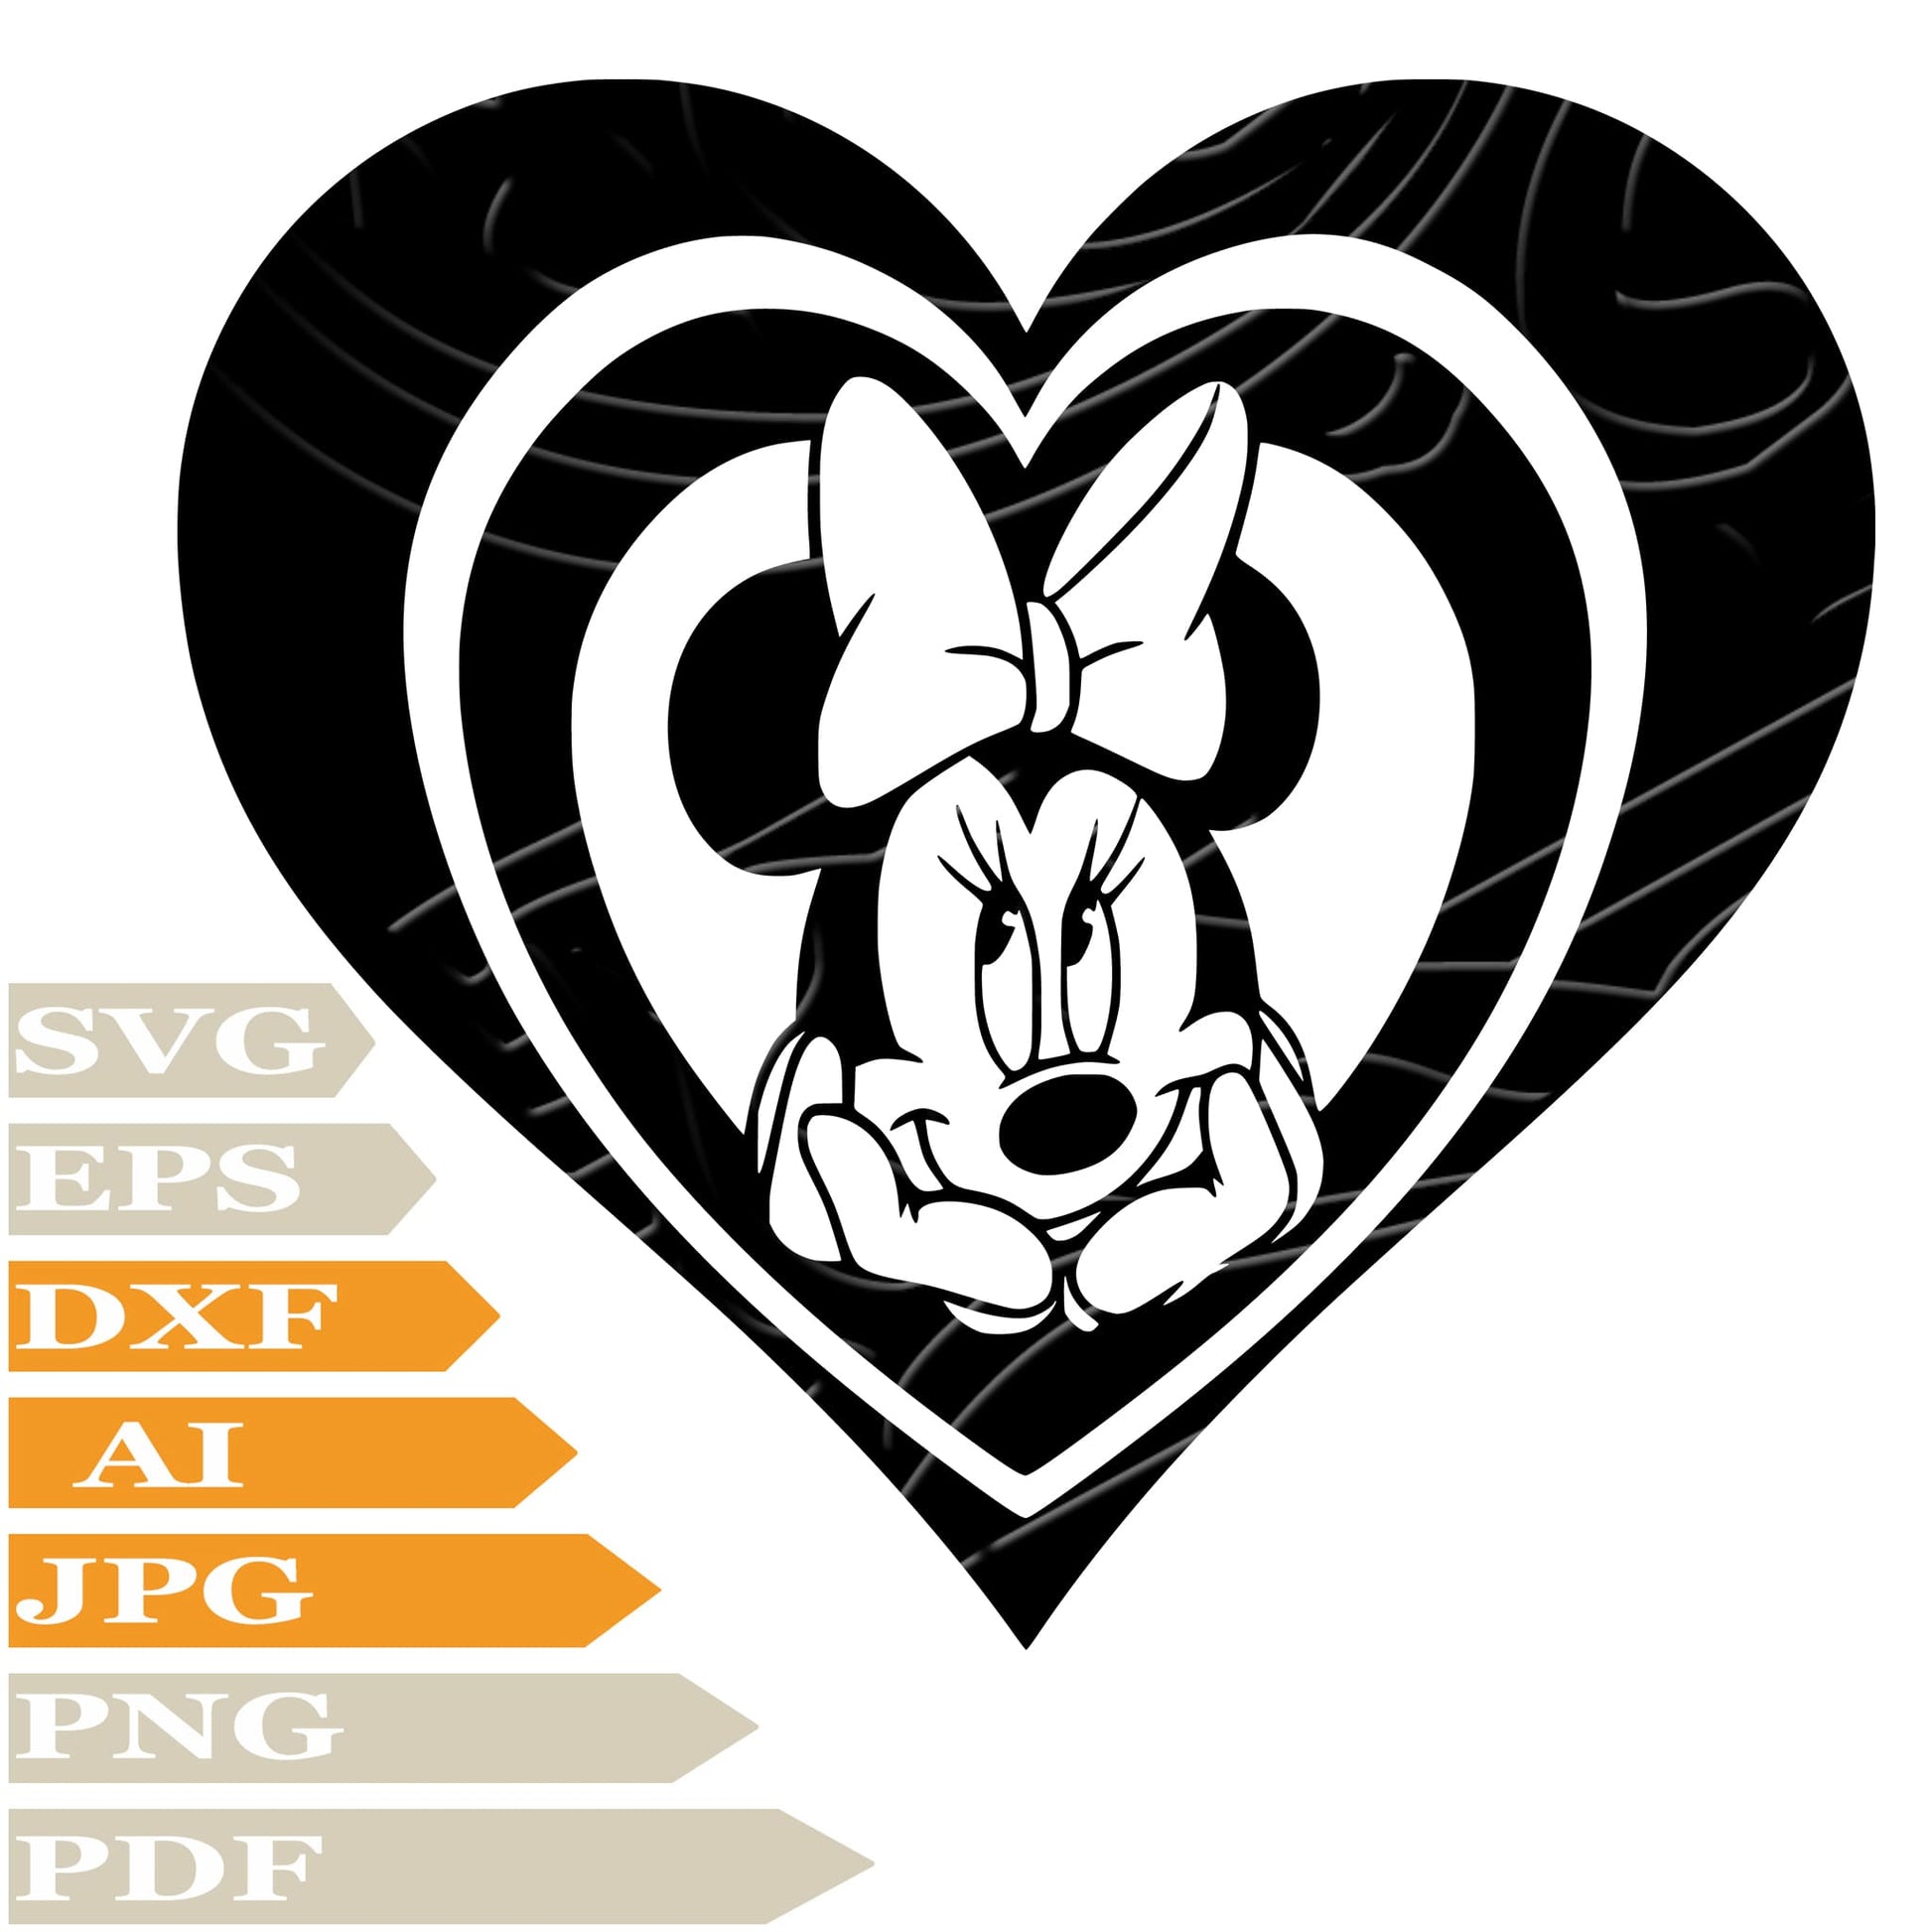 Minnie Mause SVG File, Minnie Mause In Heart Vector Graphics, Minnie Mause In Heart SVG Design, For Cricut, Cut File, Clipart, For Tattoo, Silhouette